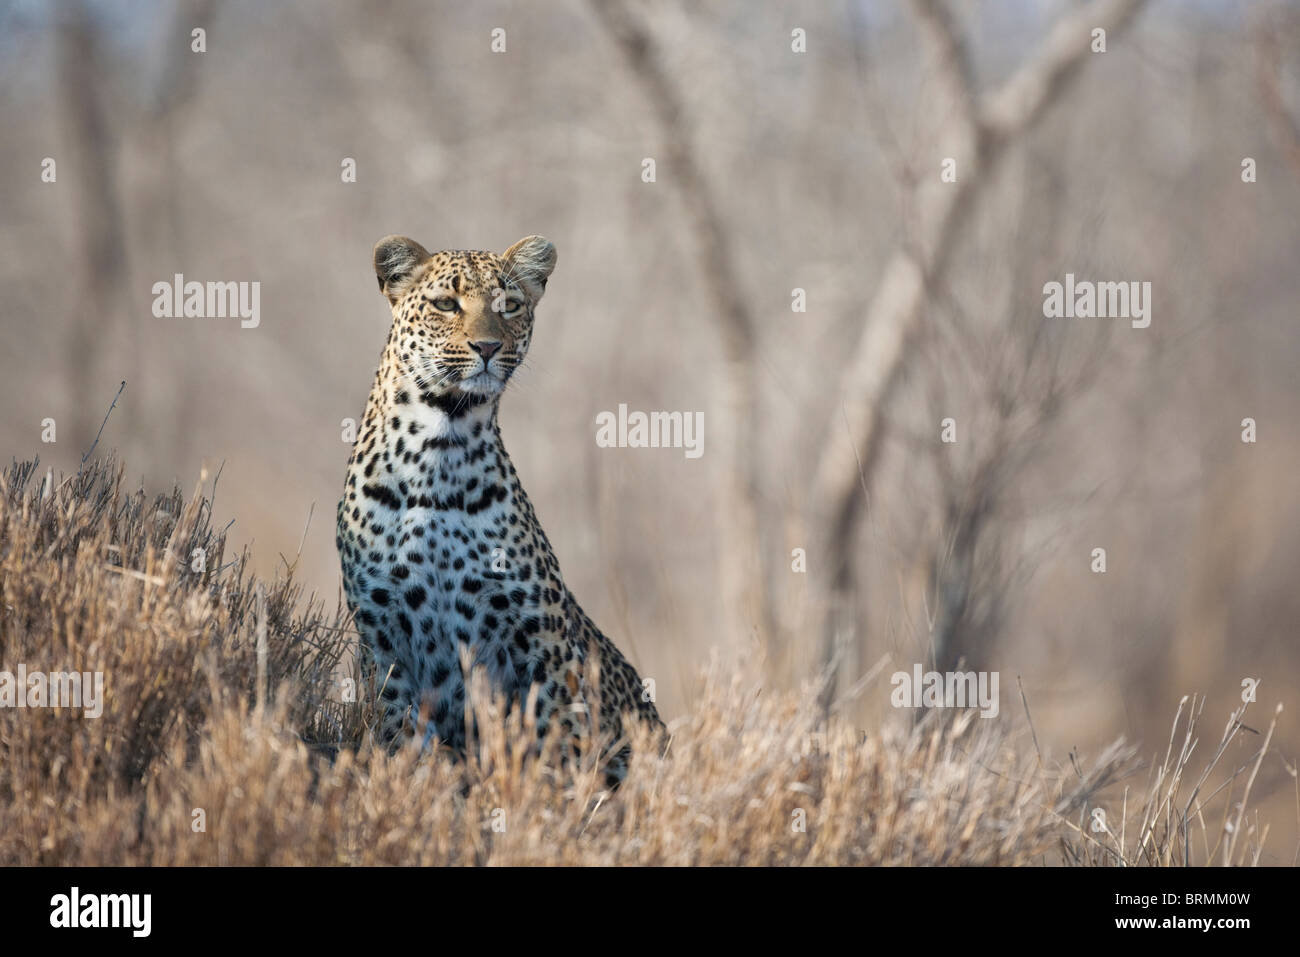 Leopard sentarse erguido mirando fijamente Foto de stock